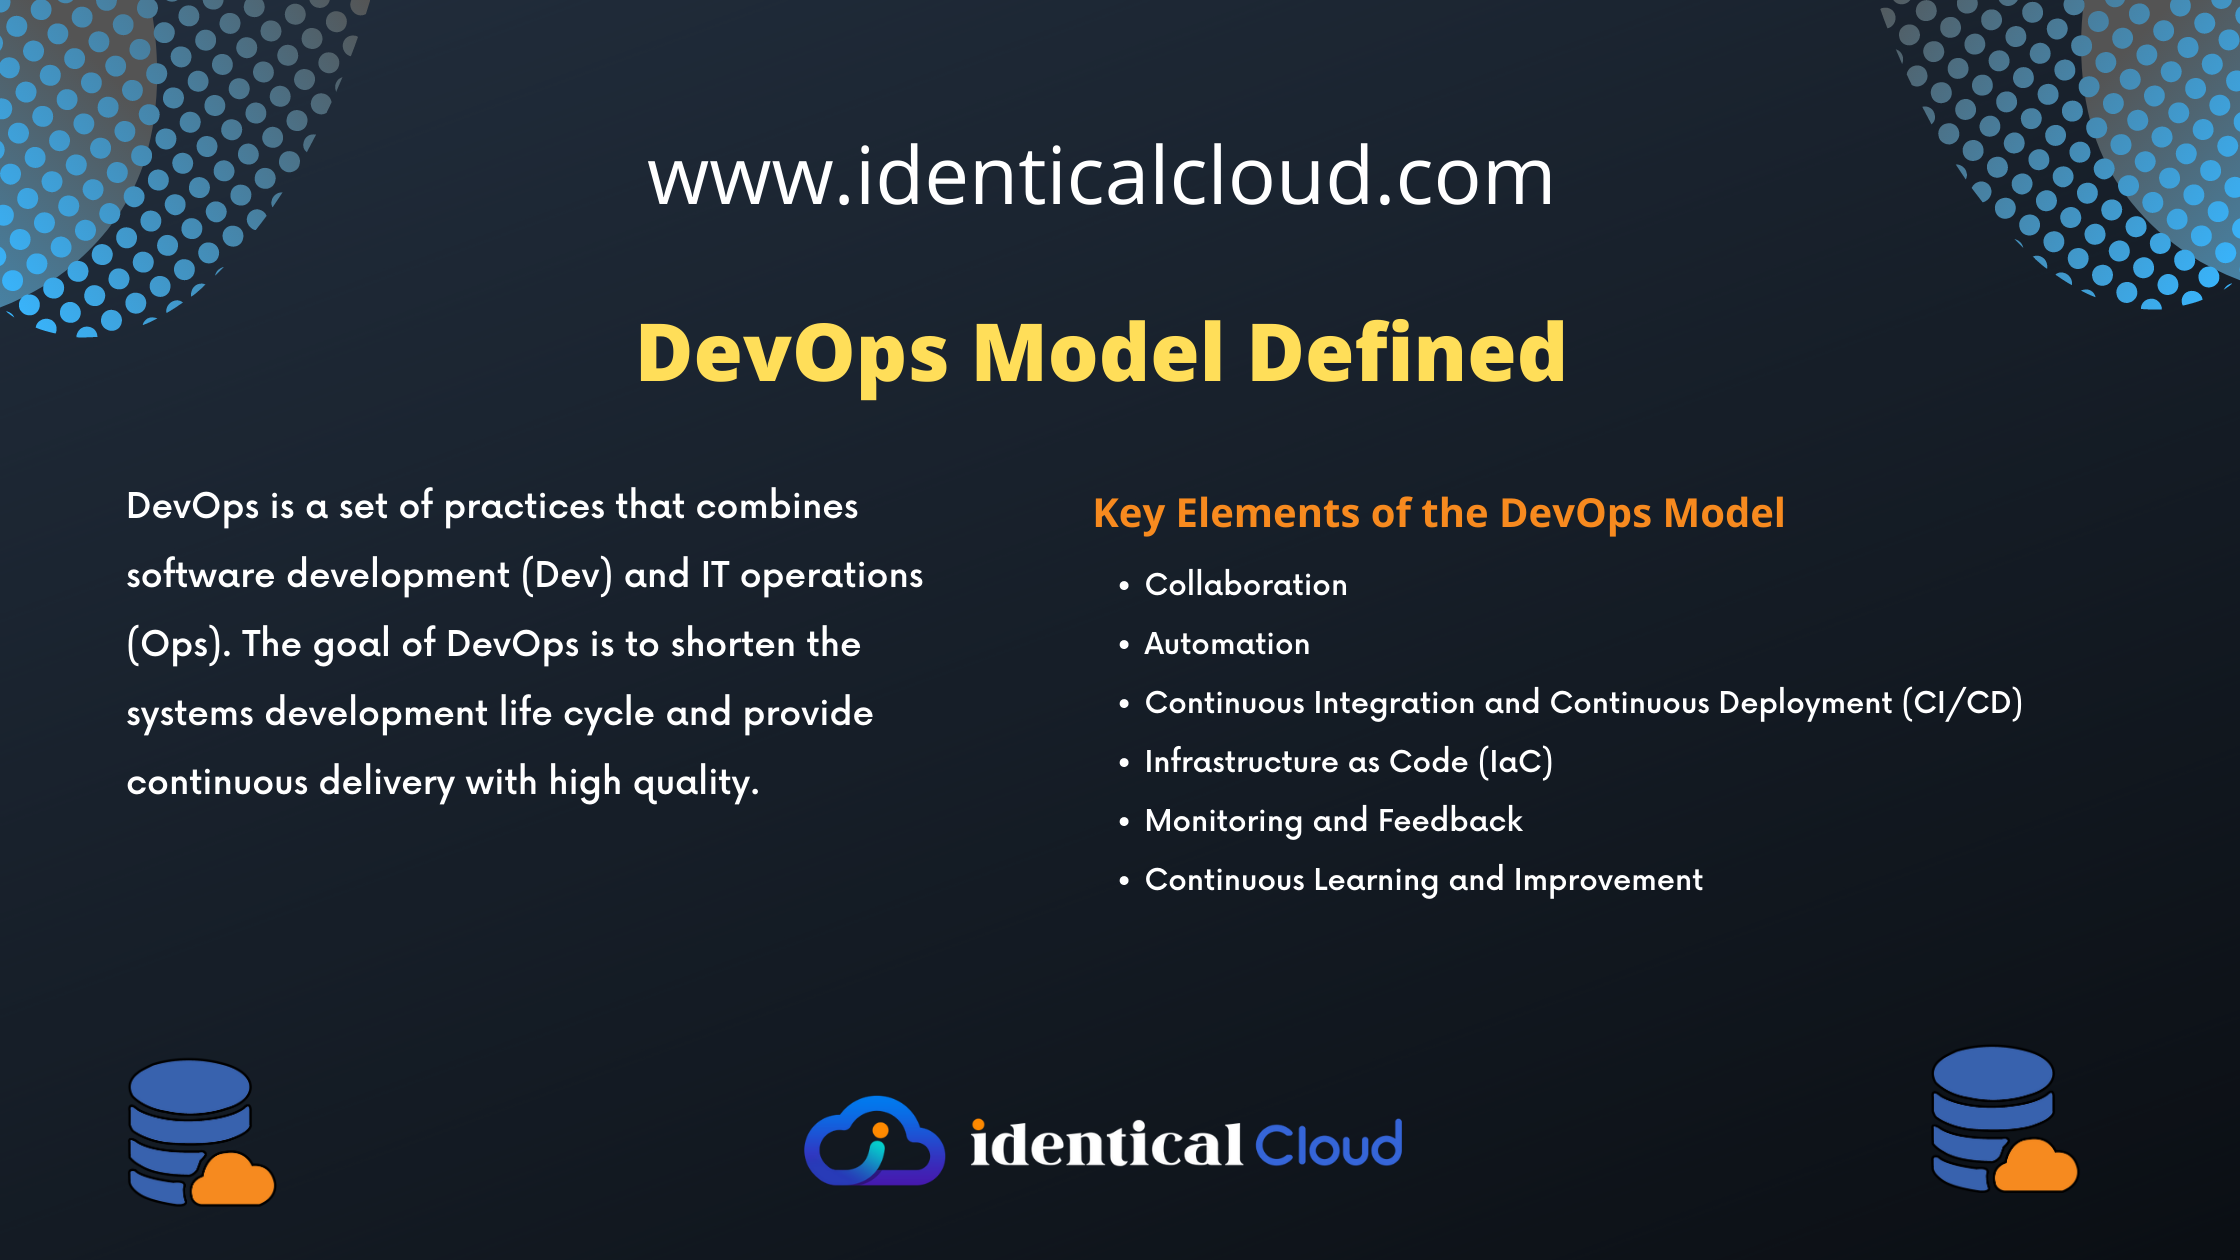 DevOps Model Defined - identicalcloud.com